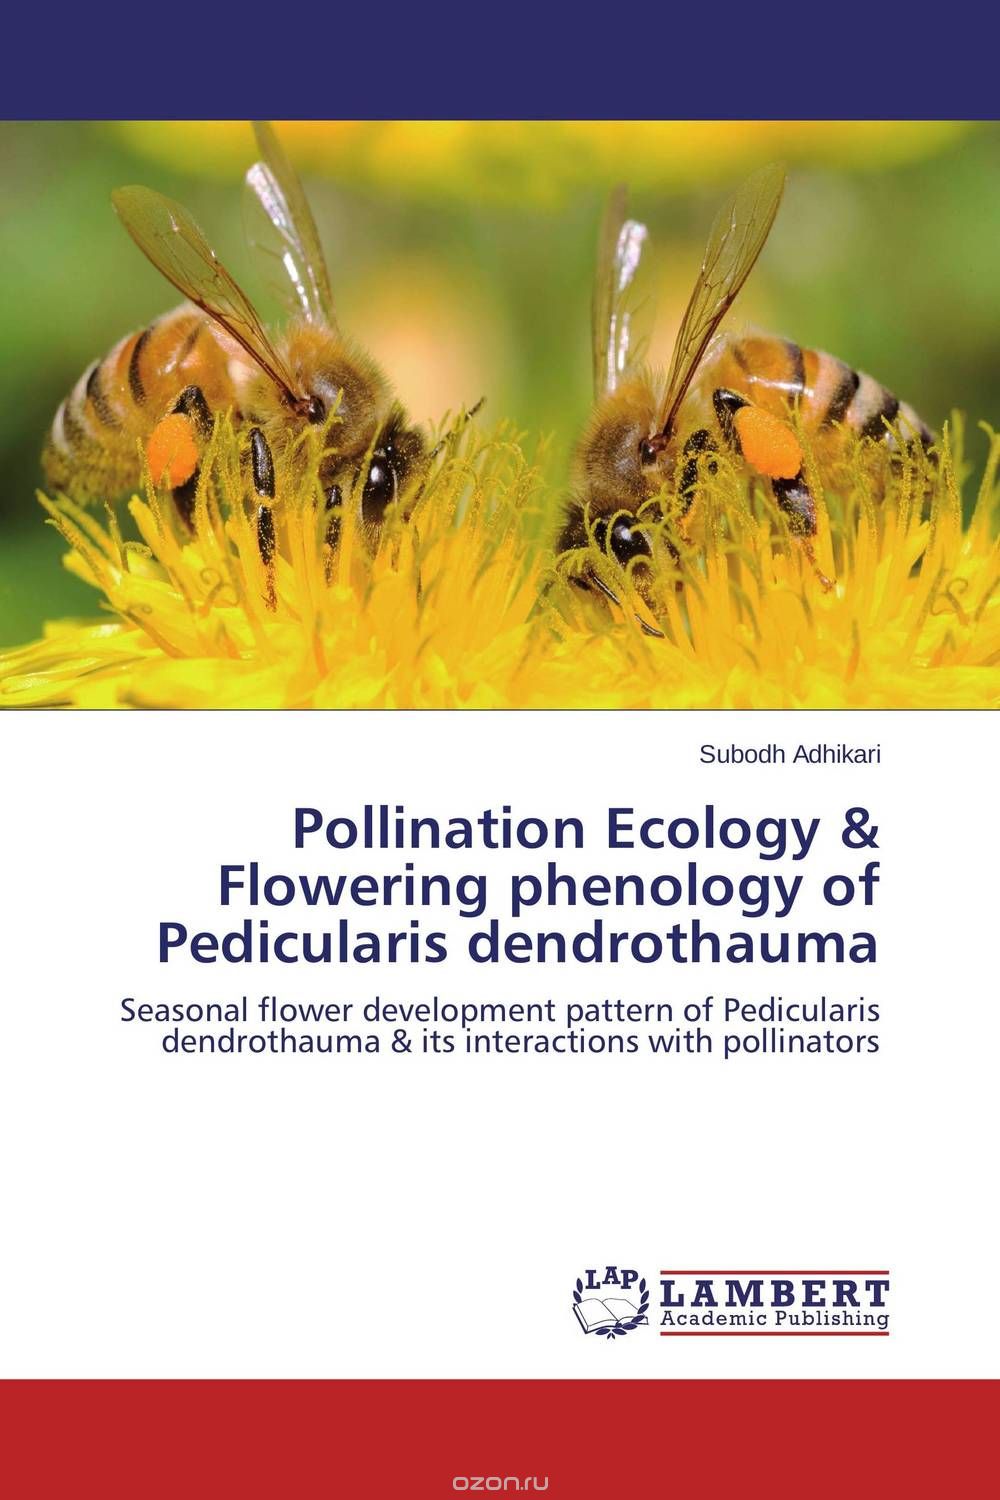 Скачать книгу "Pollination Ecology & Flowering phenology of Pedicularis dendrothauma"